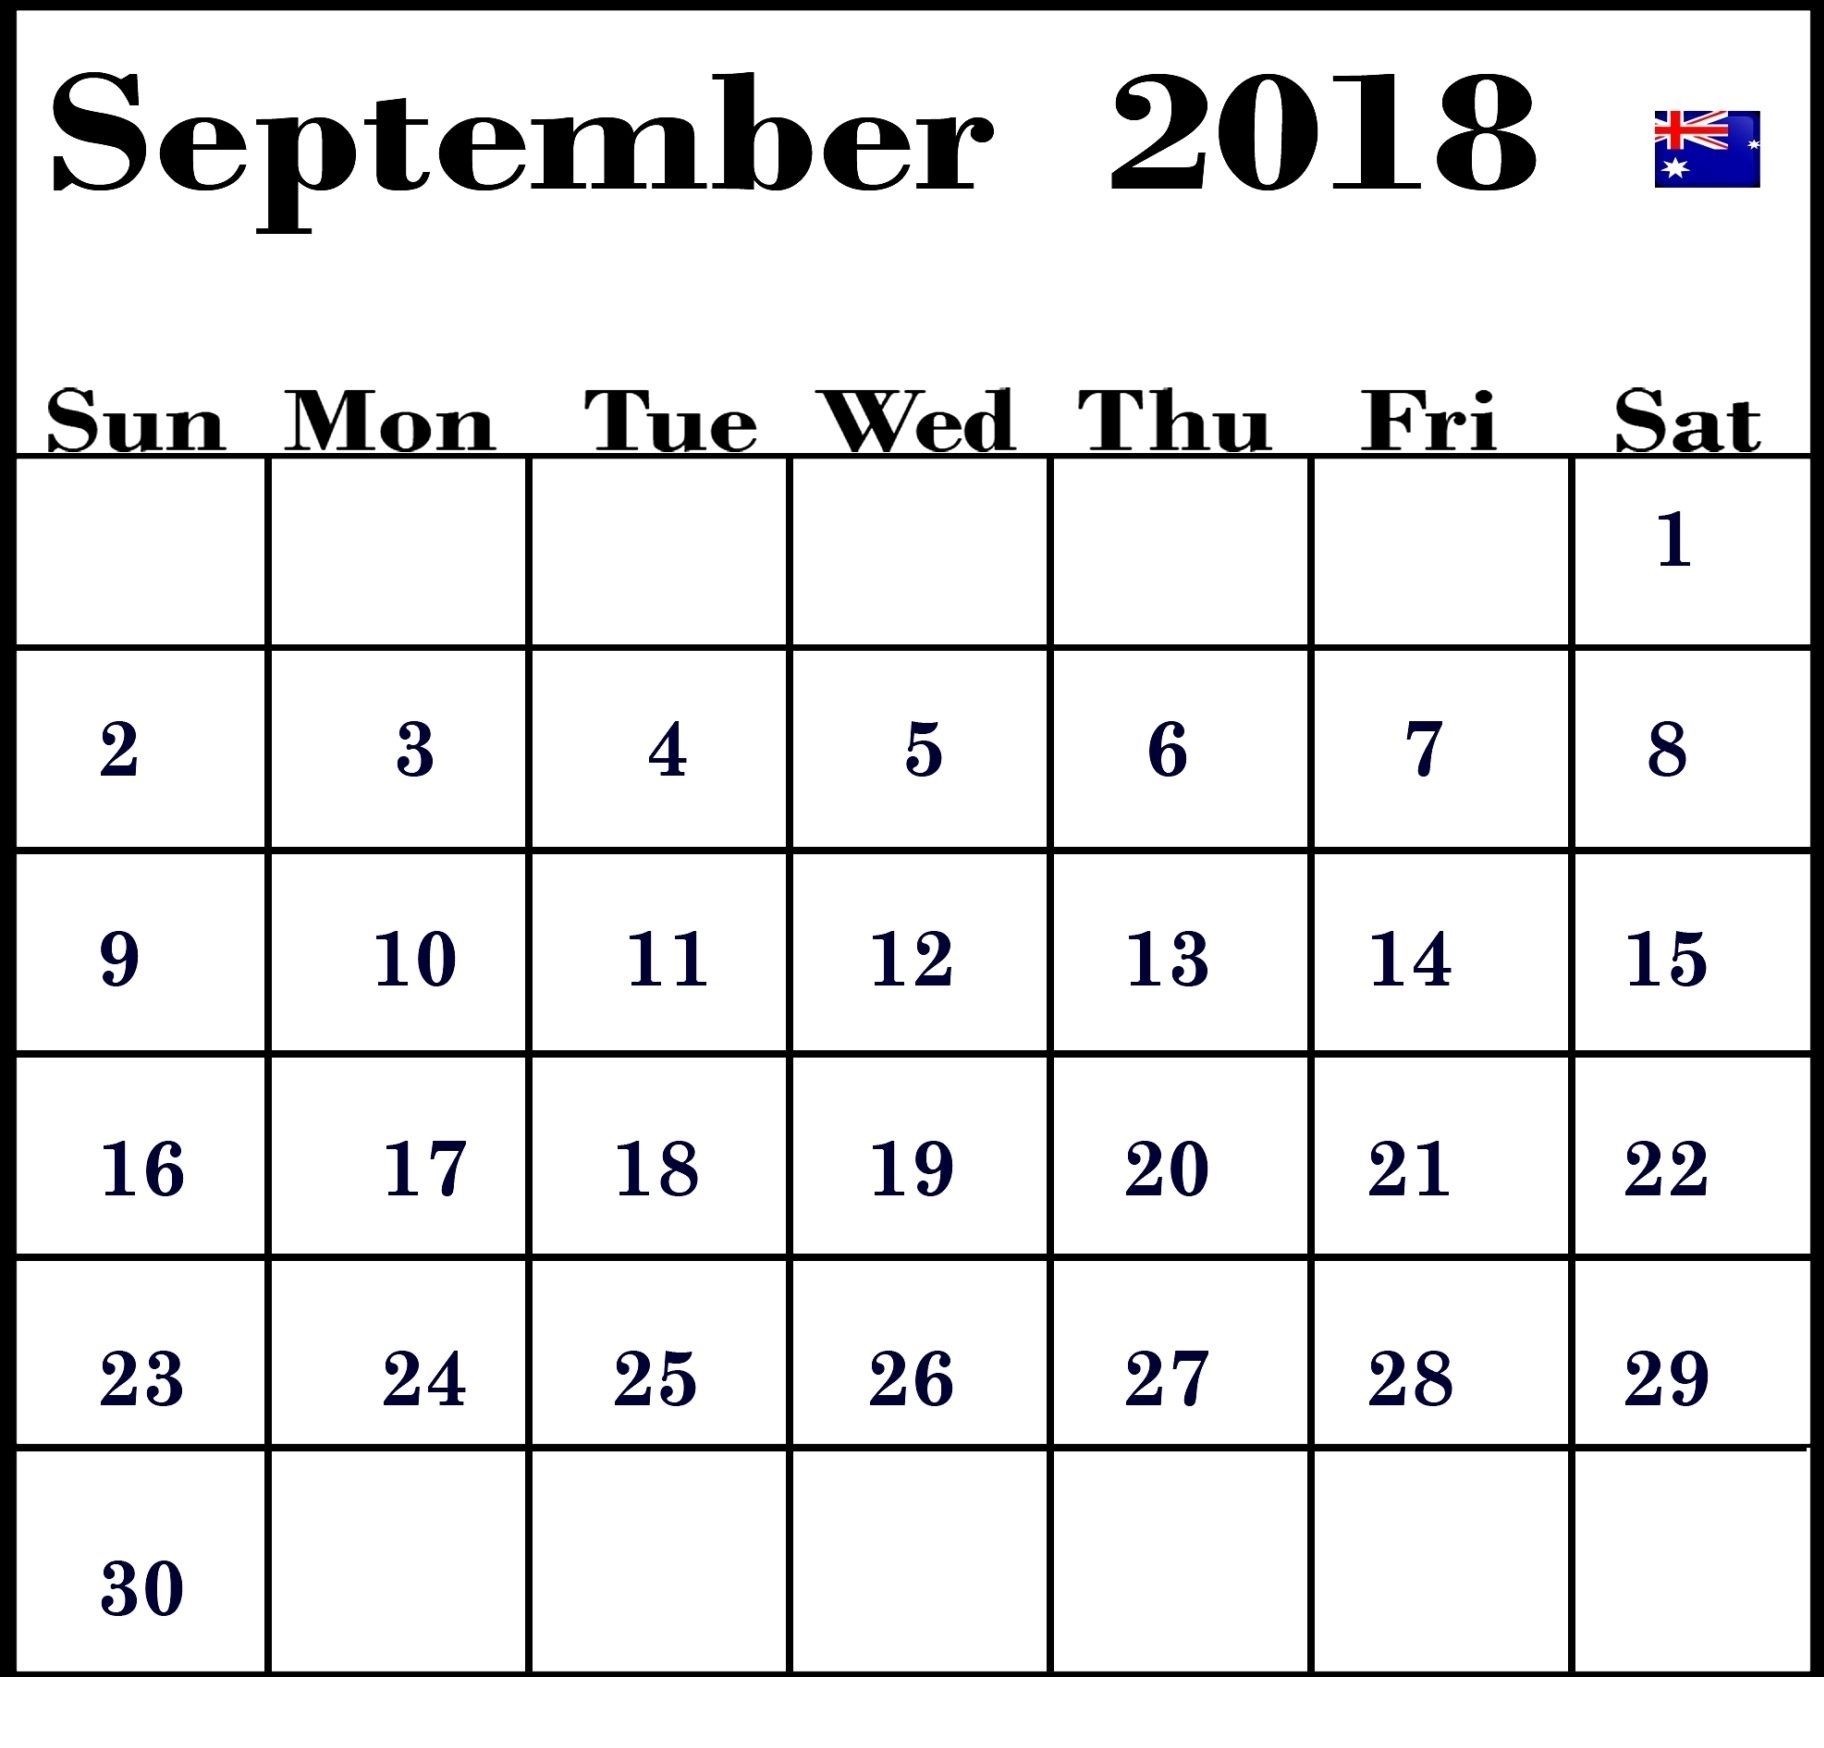 September 2018 Calendar Template Date Range – Printable Calendar Blank Calendar Date Range